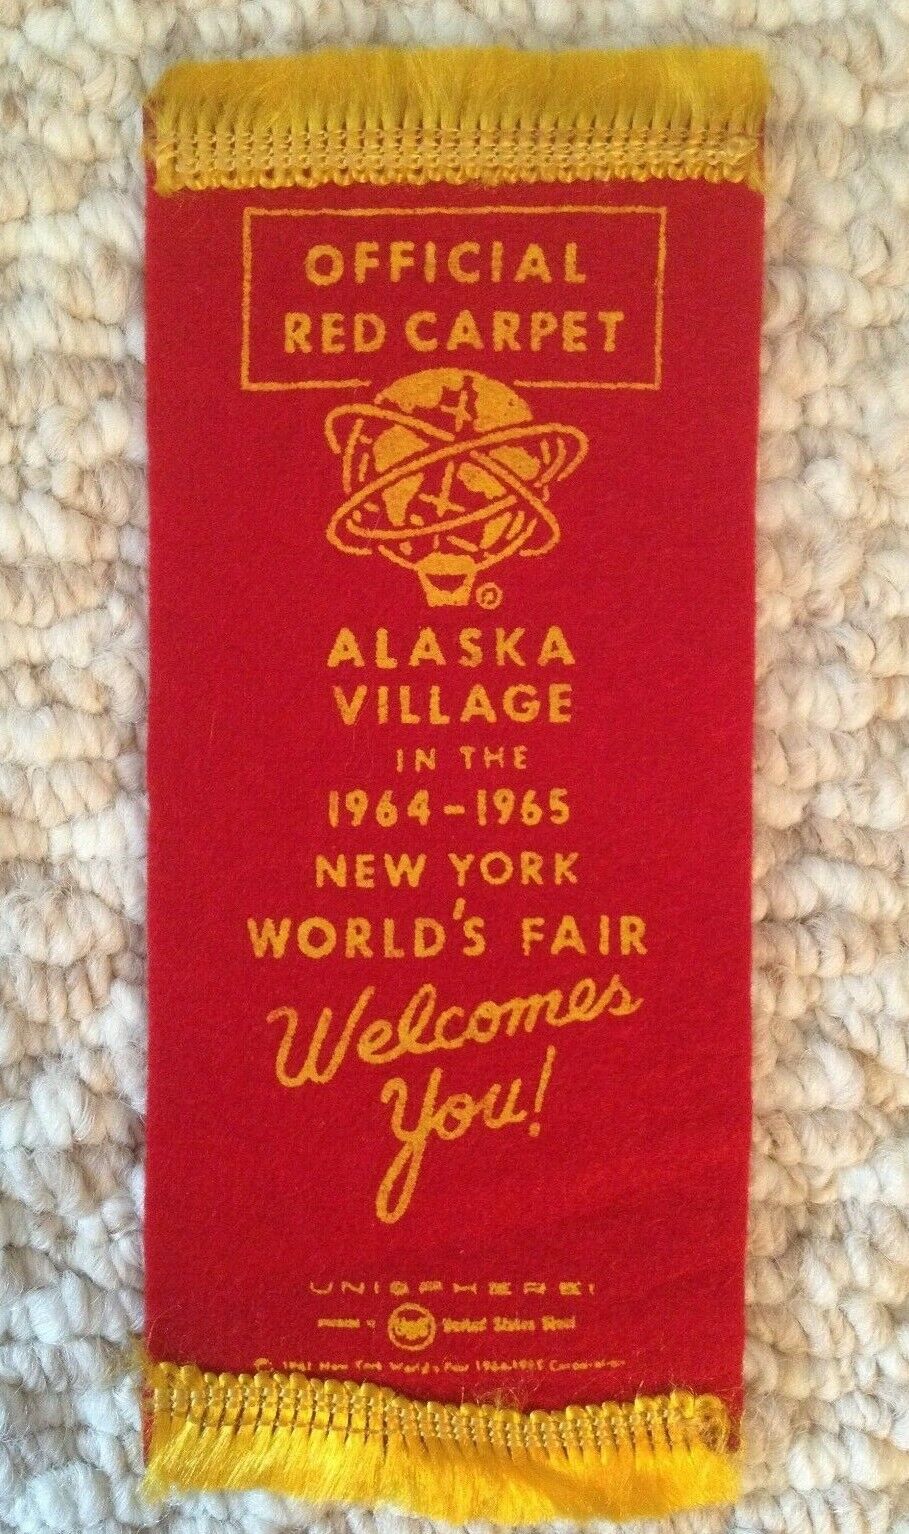 1964-65 NY World's Fair Alaska Village Official Red Carpet (Unisphere logo)